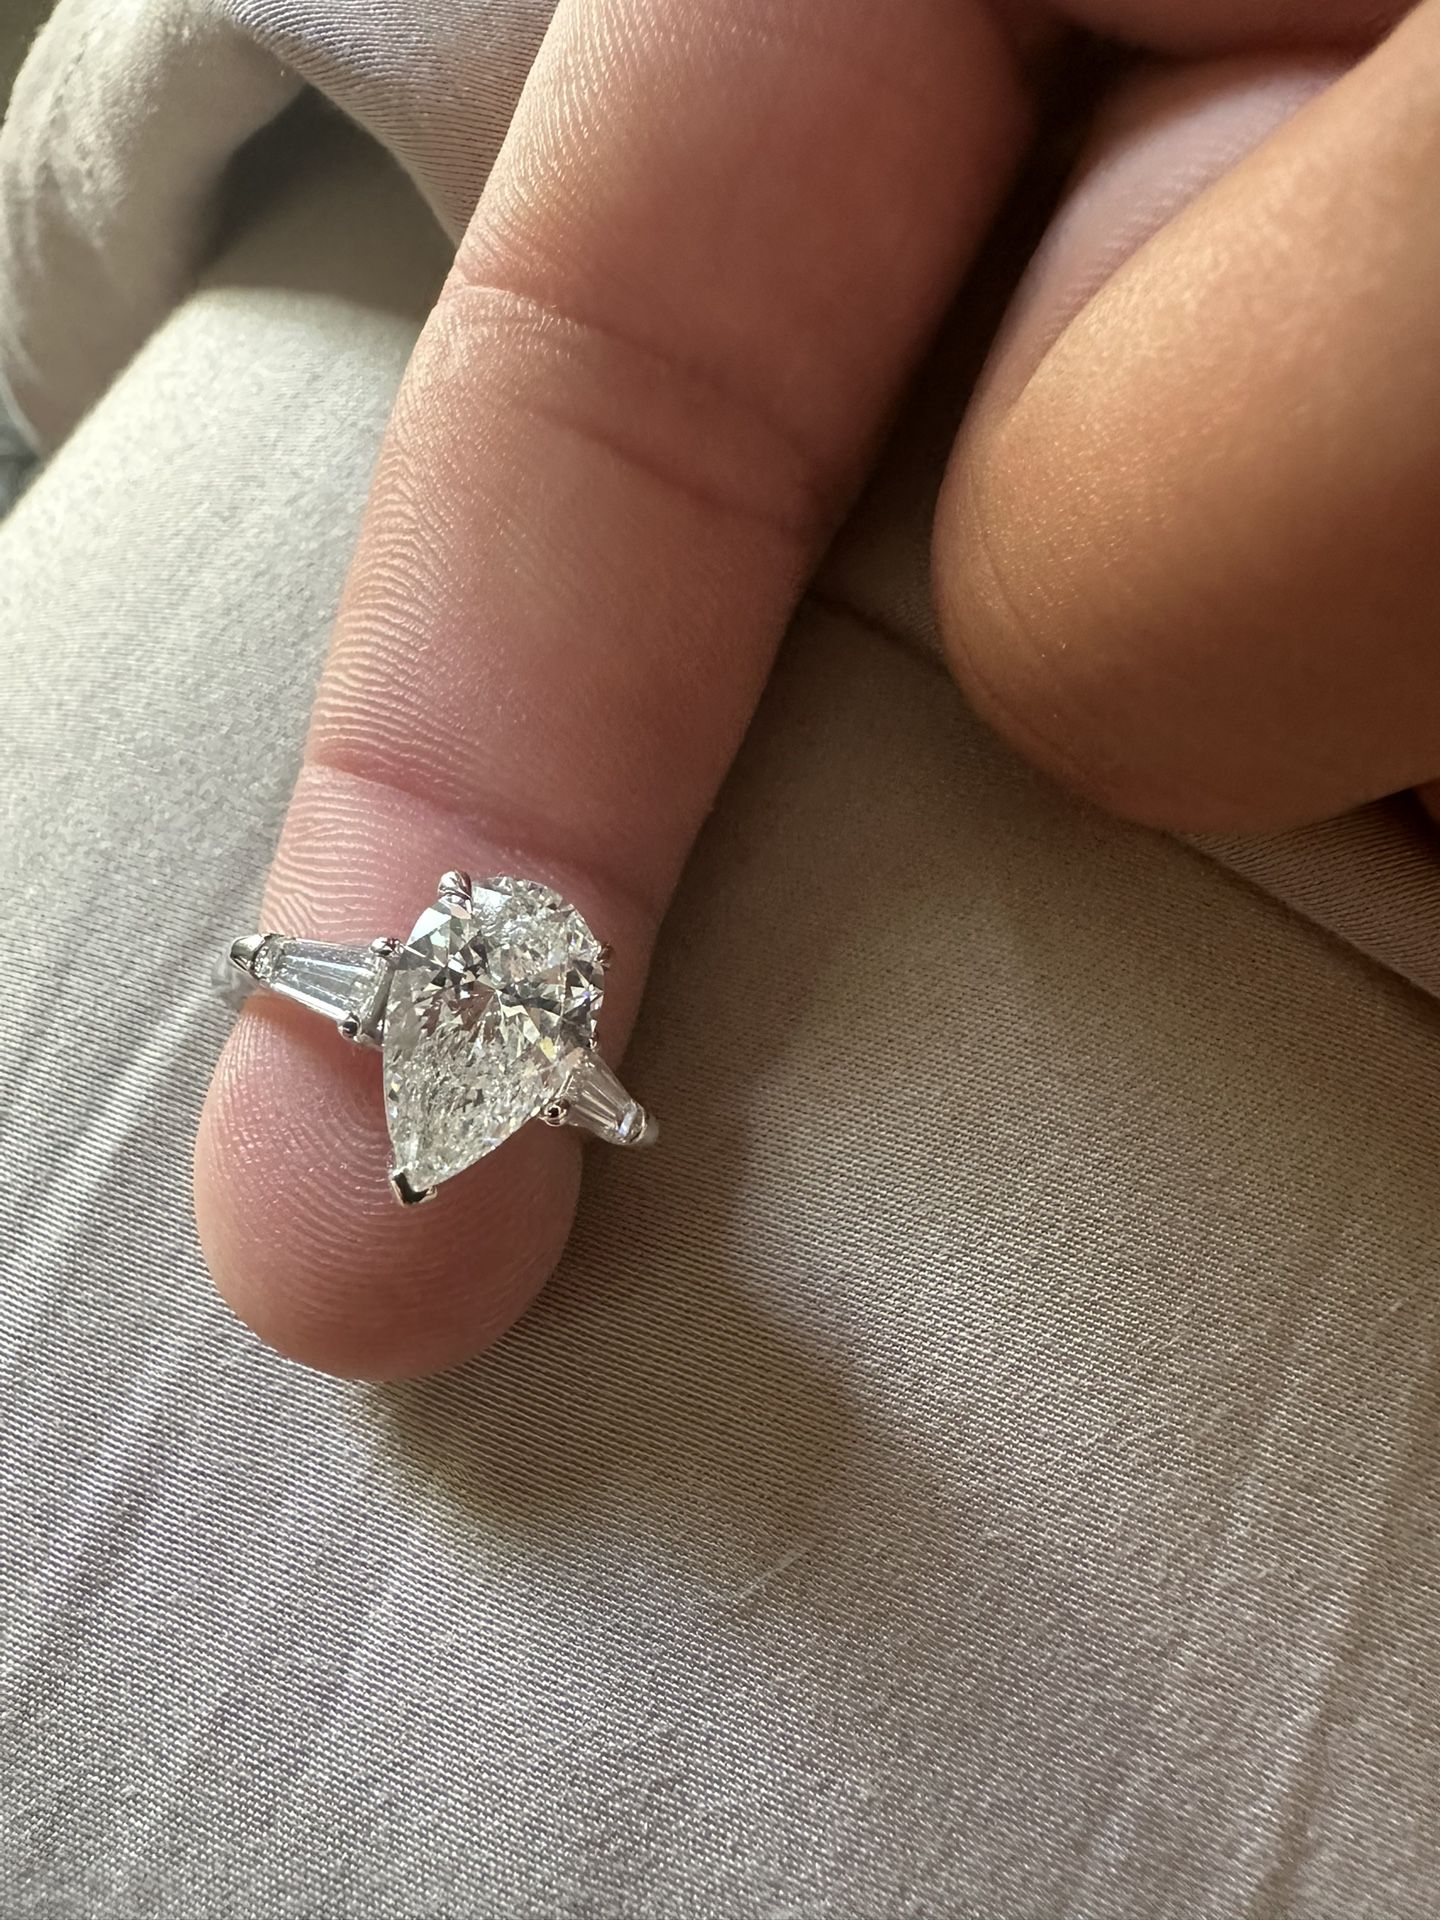 Lab Diamond Engagement Ring 